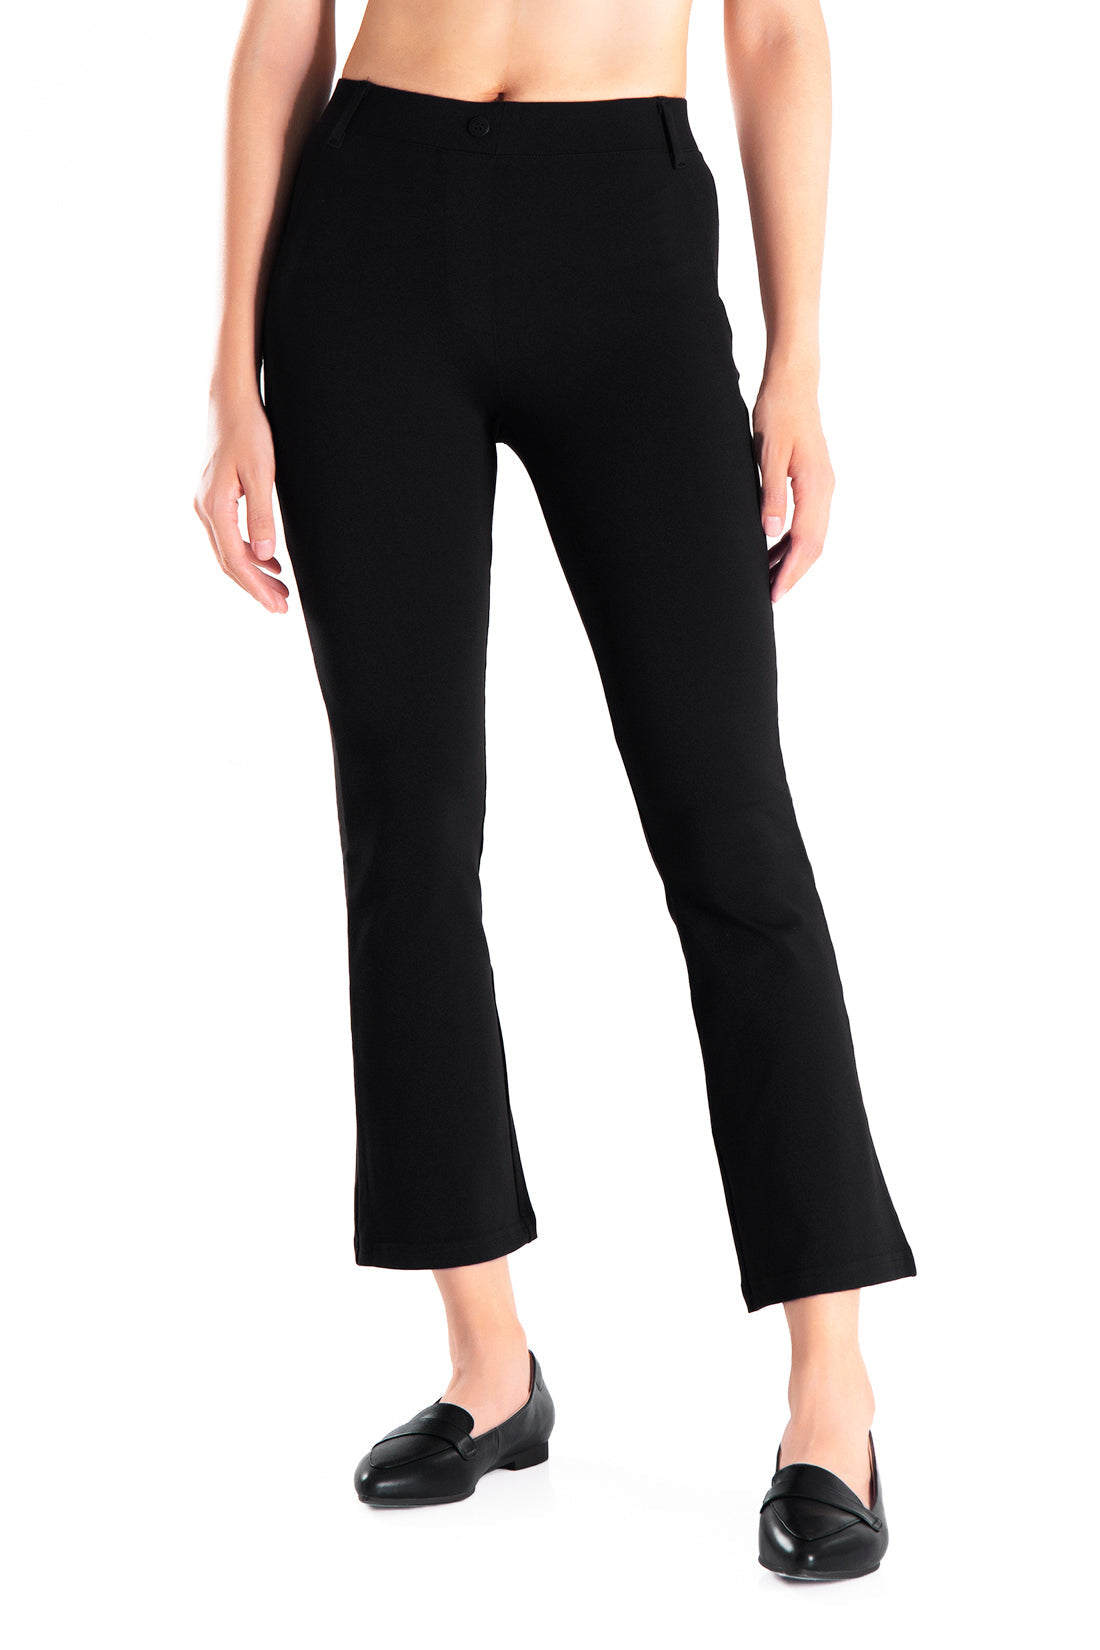 Bootcut Yoga Dress Pants, 4 Pockets (Black) – Yogipace